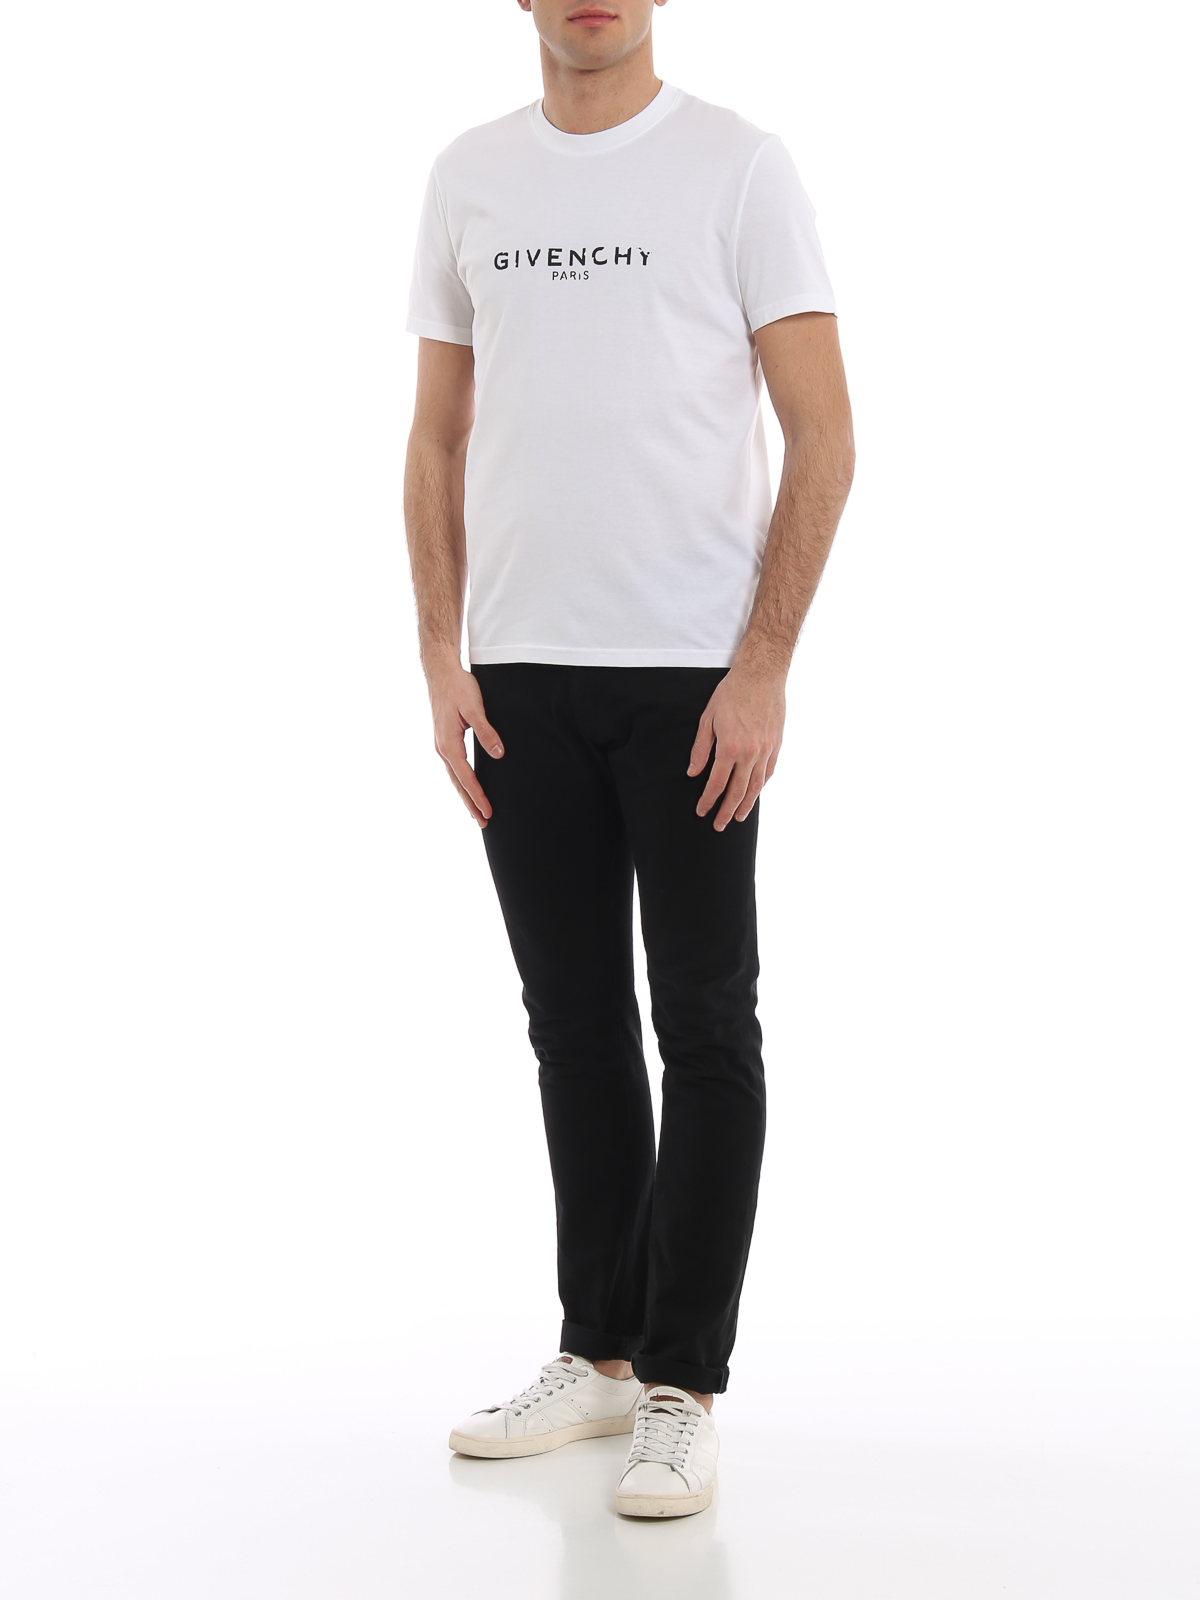 T-shirts Givenchy - Givenchy Paris white slim fit T-shirt - BM70K93002100